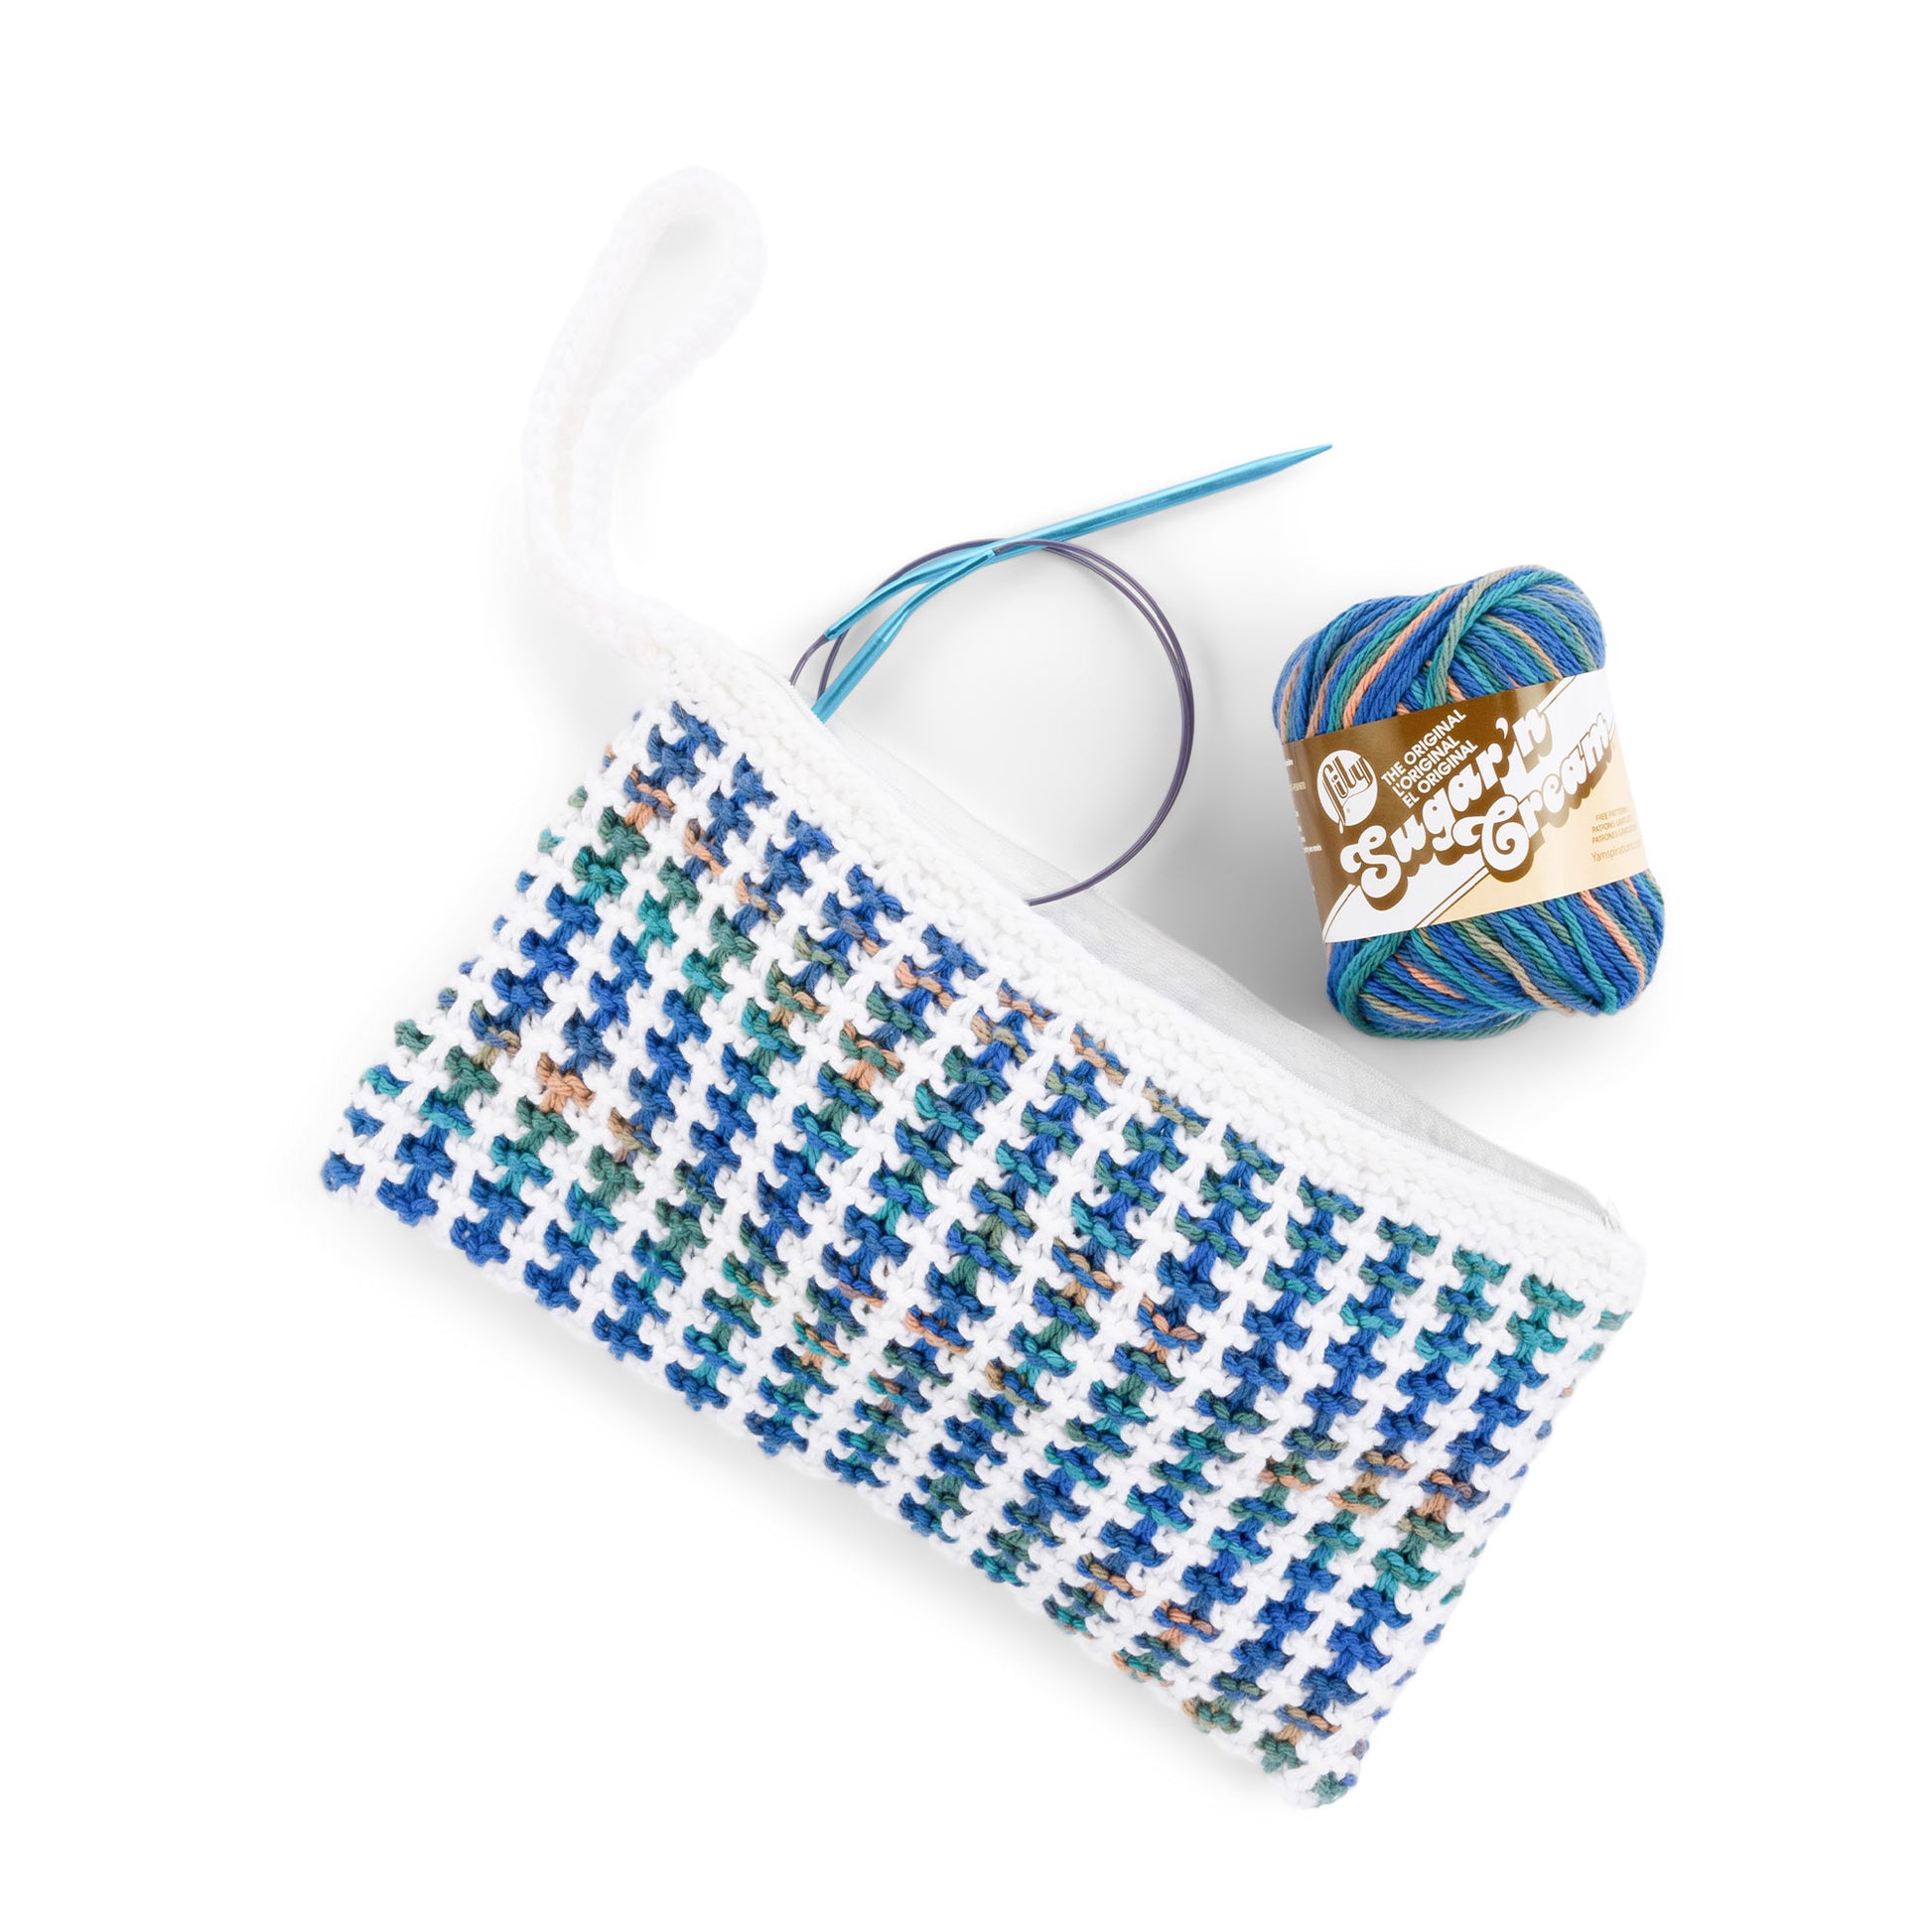 Free Lily Tweed Stitch Knit Project Bag Pattern